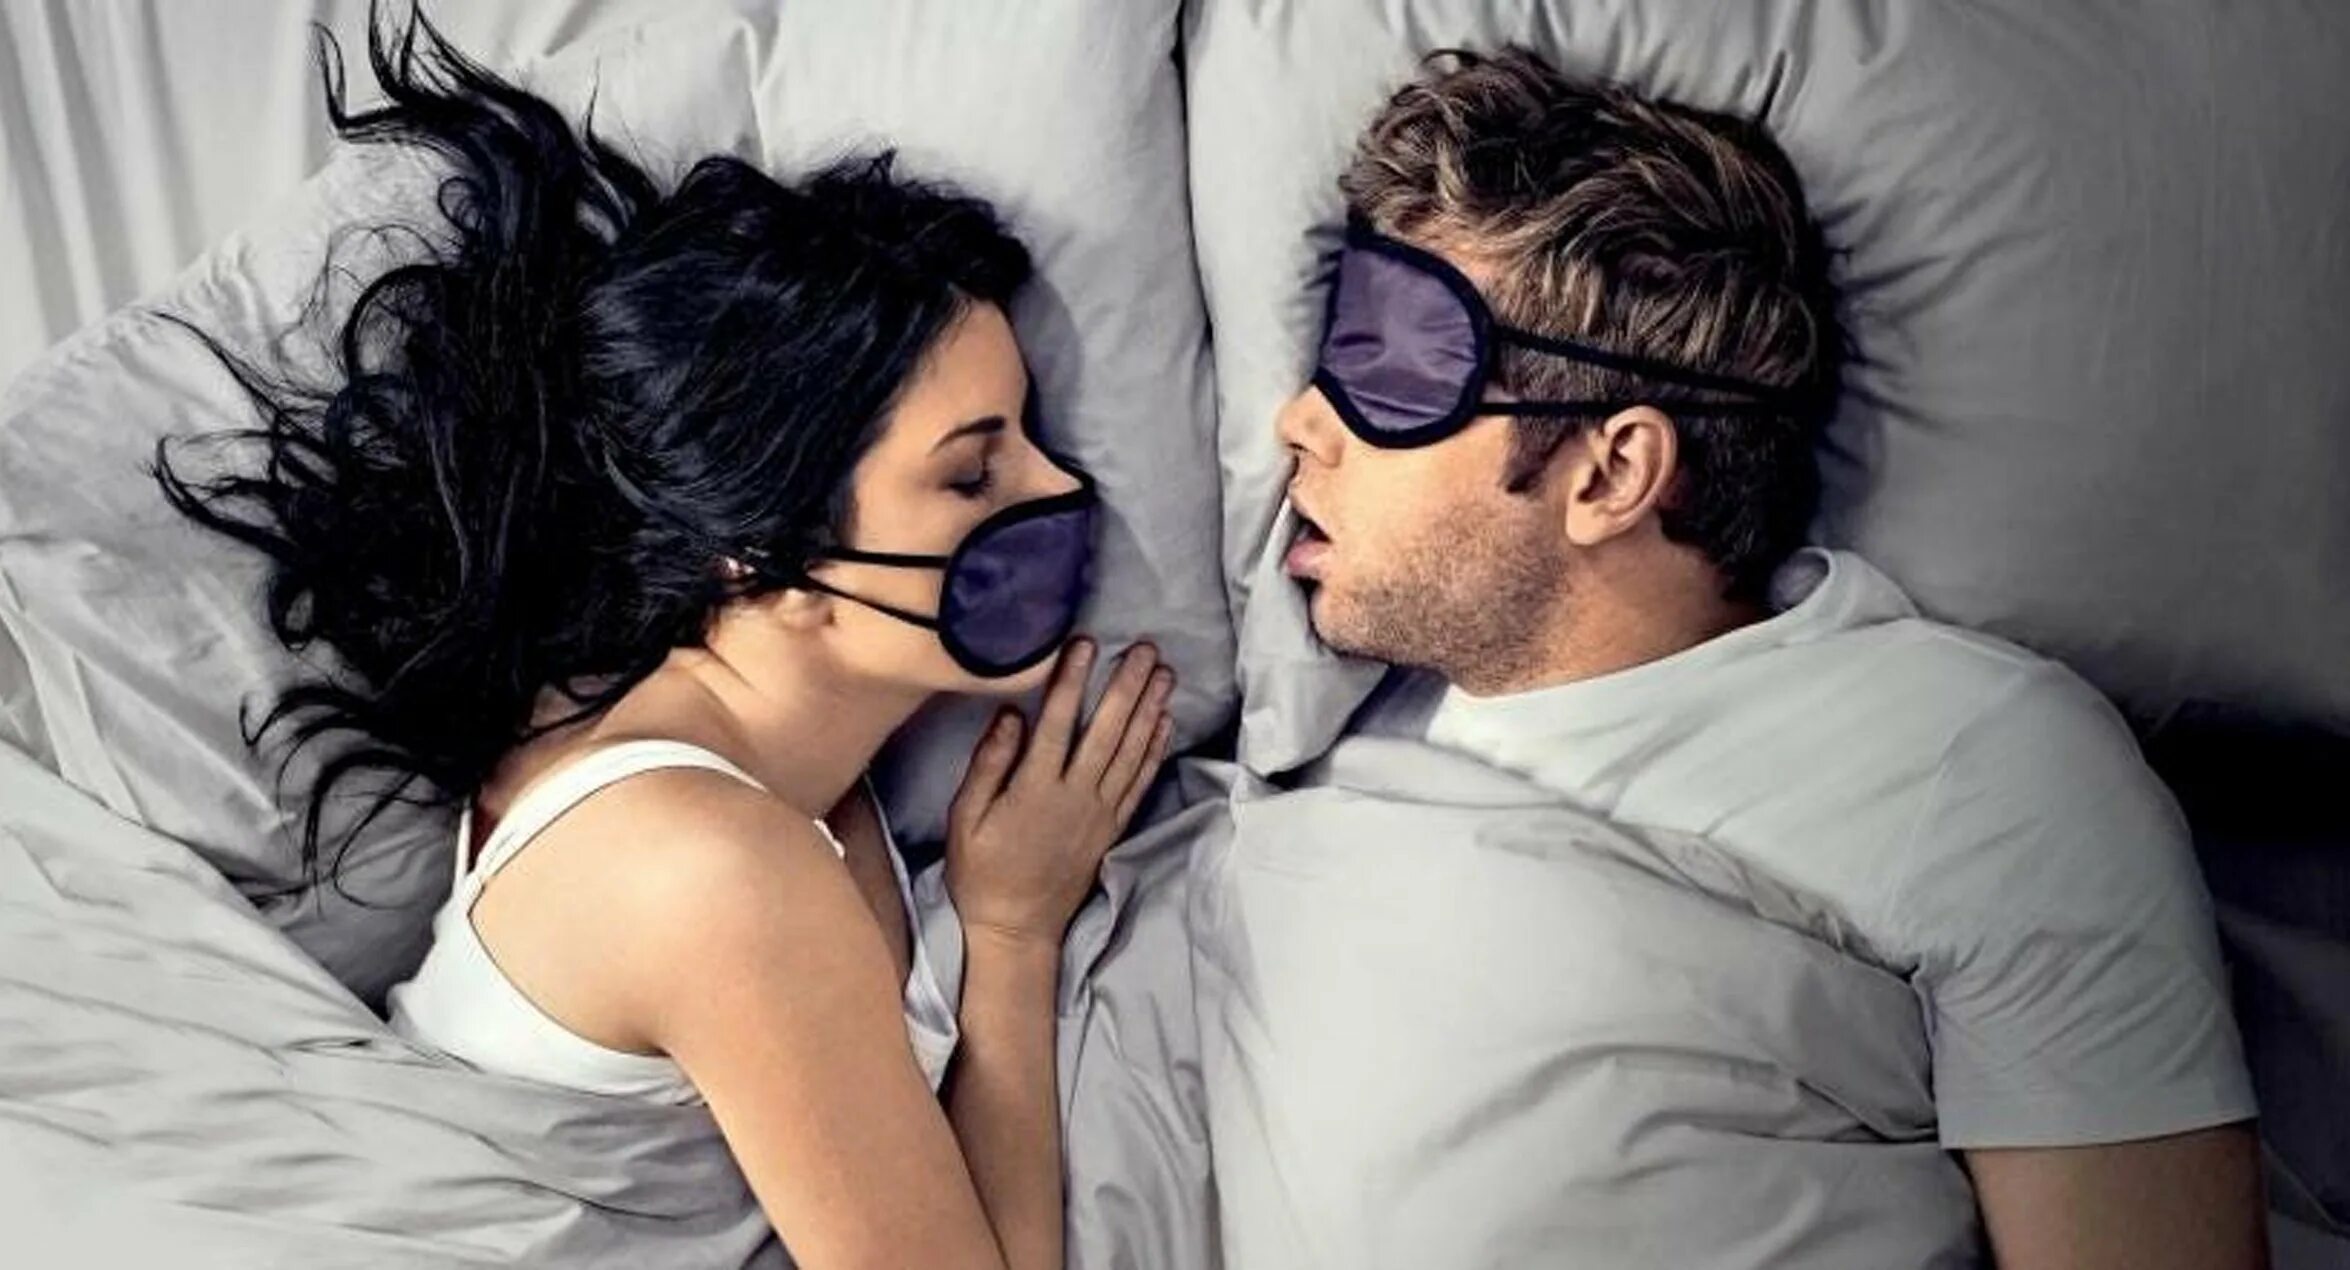 Мужчина в маске для сна. Мужчина и женщина в масках. Женщина в маске для сна. Женщина и мужчина разговор в ночи. Плохо пахнущие мужчины